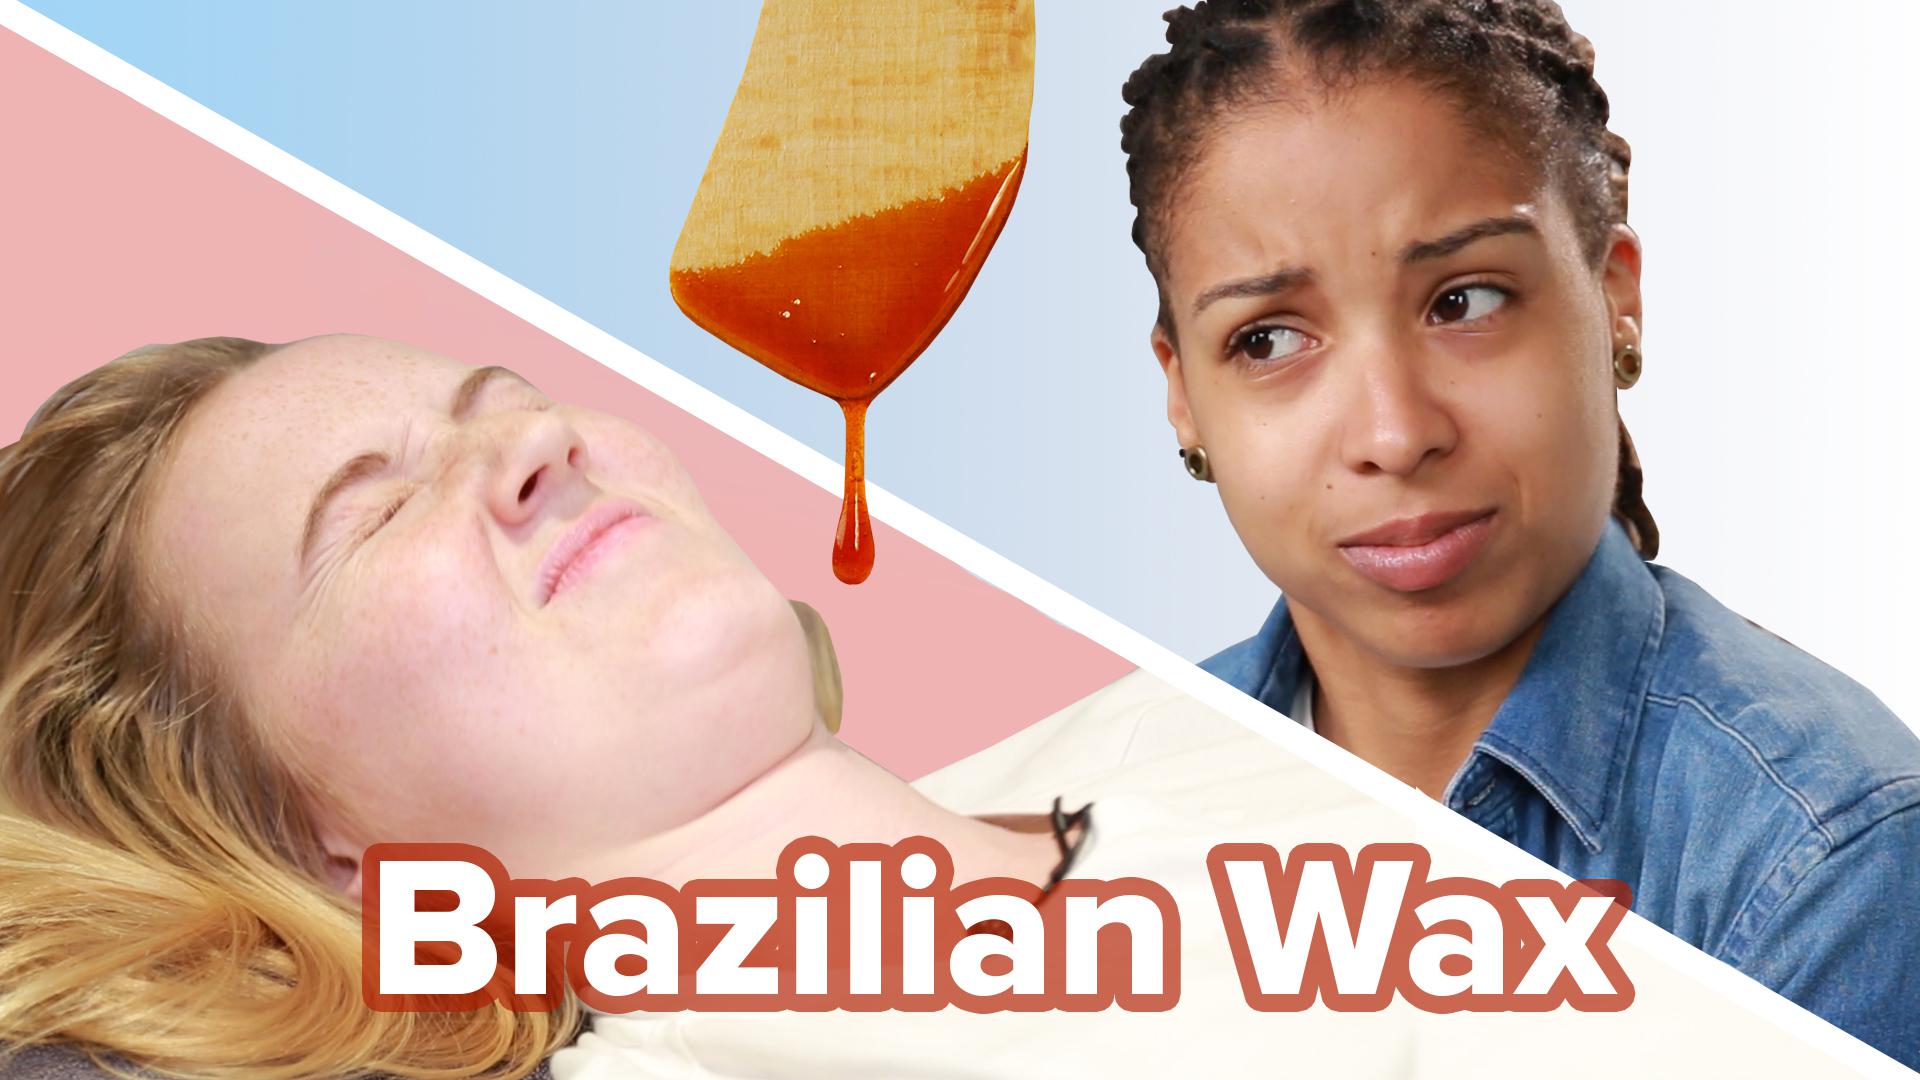 brian saraiva recommends Brazilian Waxing Video Full